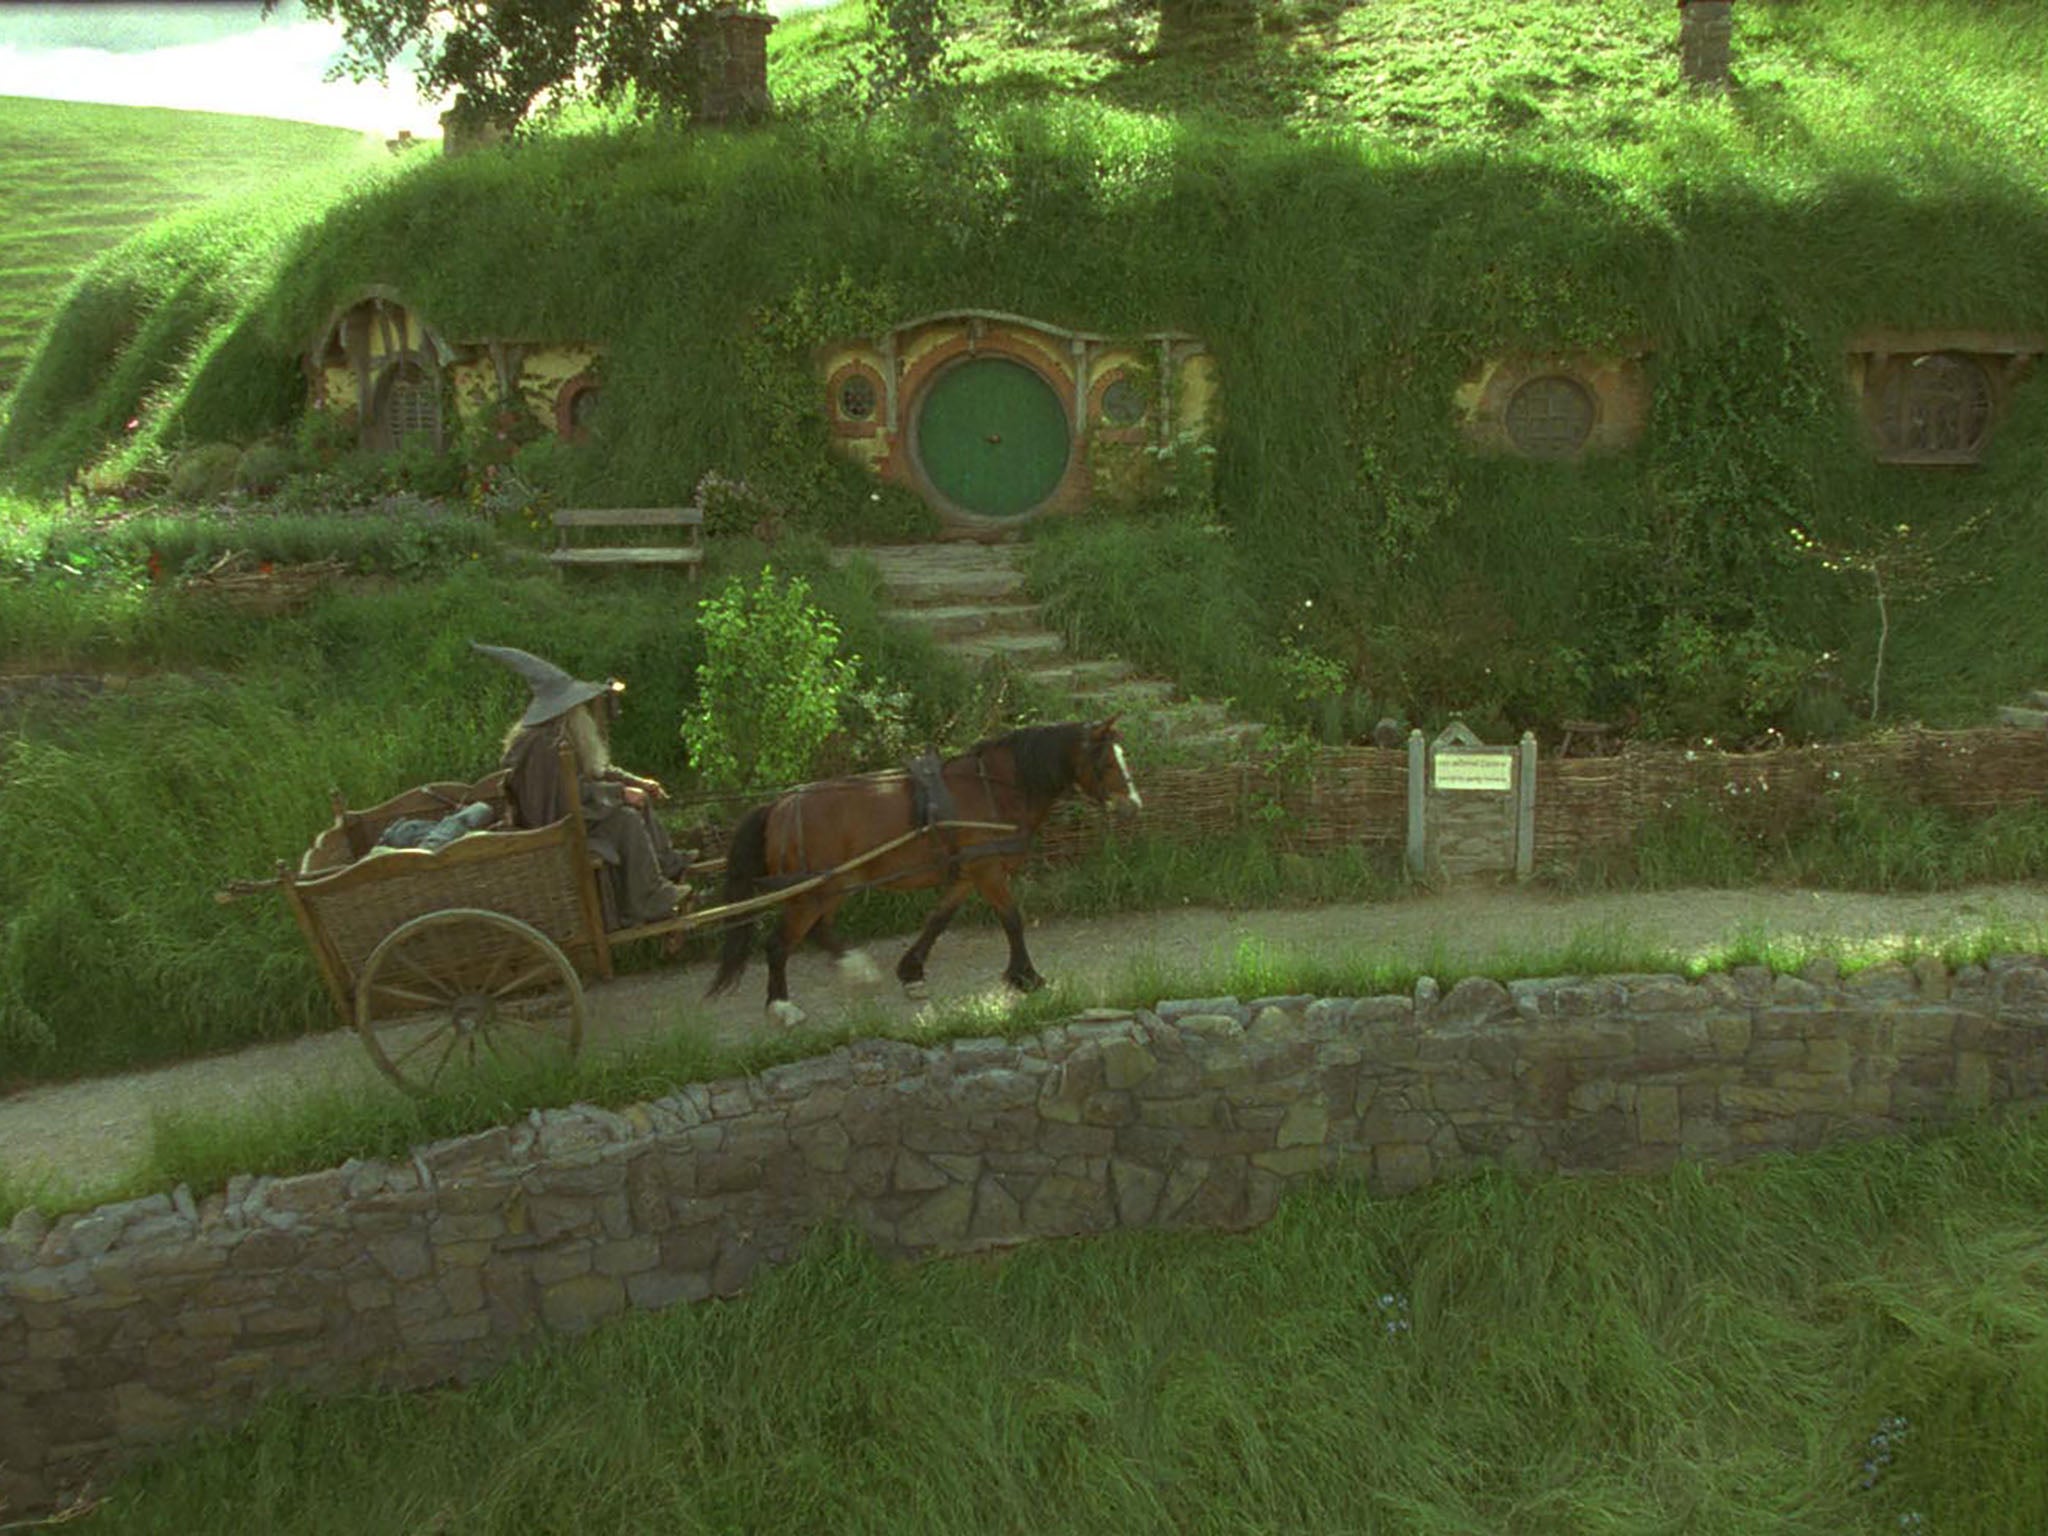 Ian McKellen’s Gandalf roams near the Hobbit holes